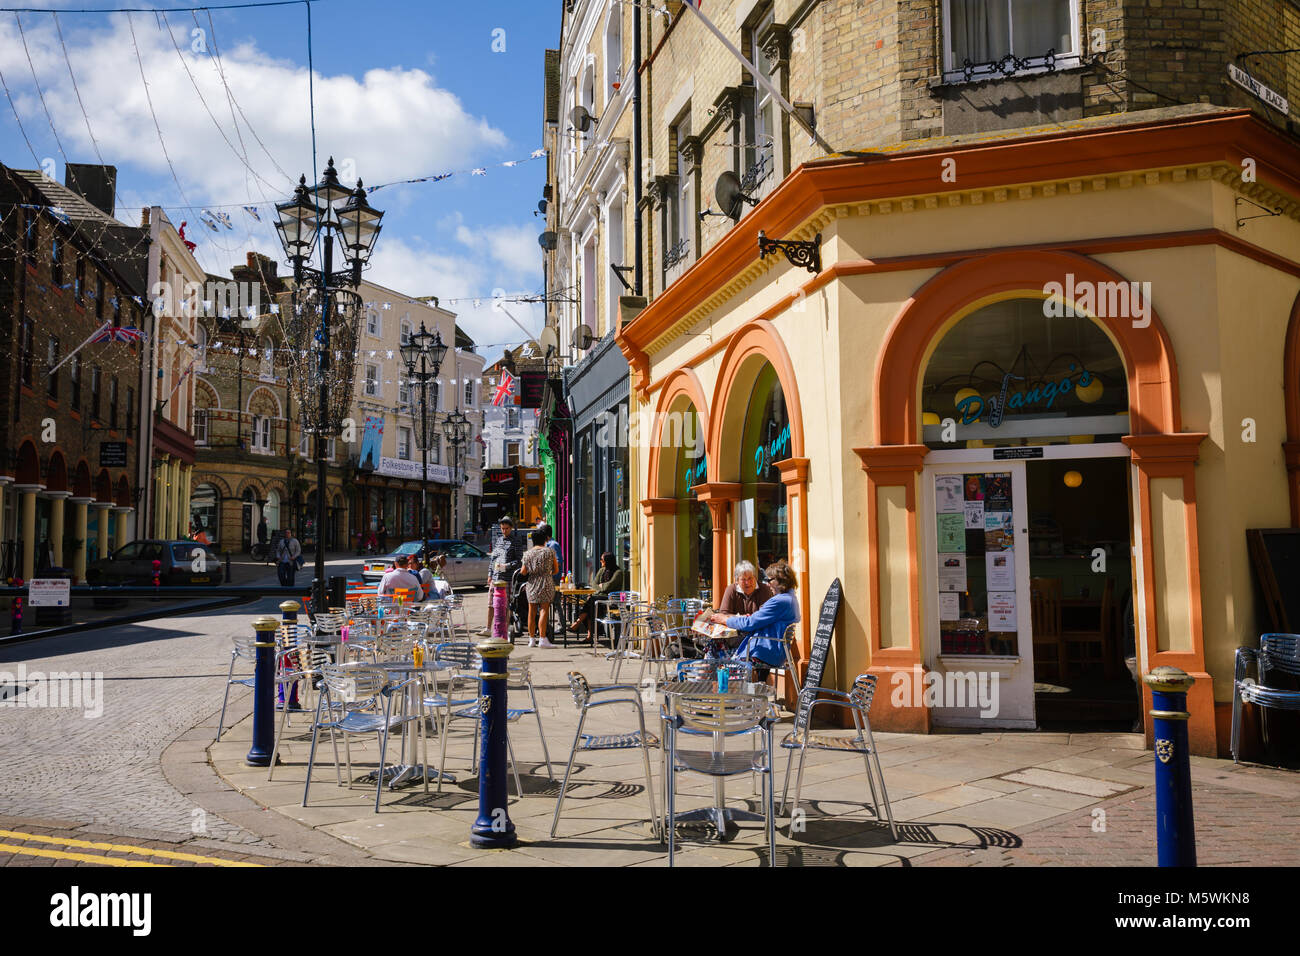 FOLKESTONE, UK - JUN 3, 2013: Customers dining at a sidewalk cafe on a sunny summer day Stock Photo